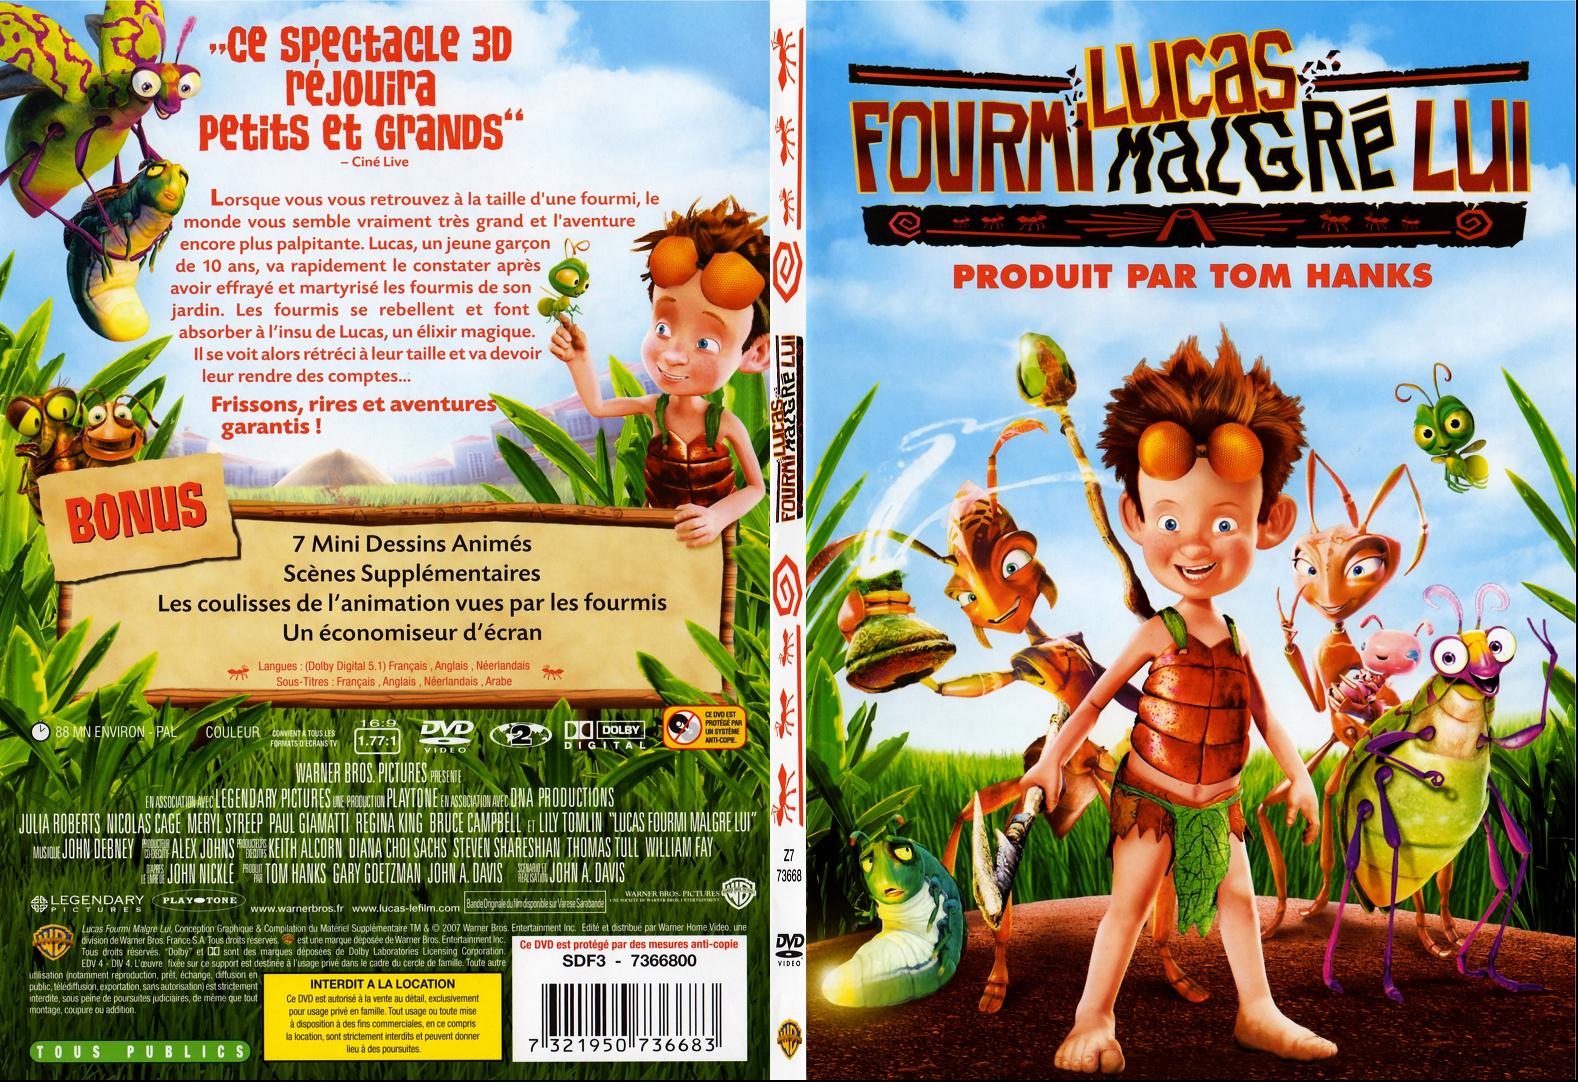 Jaquette DVD Lucas fourmi malgre lui - SLIM